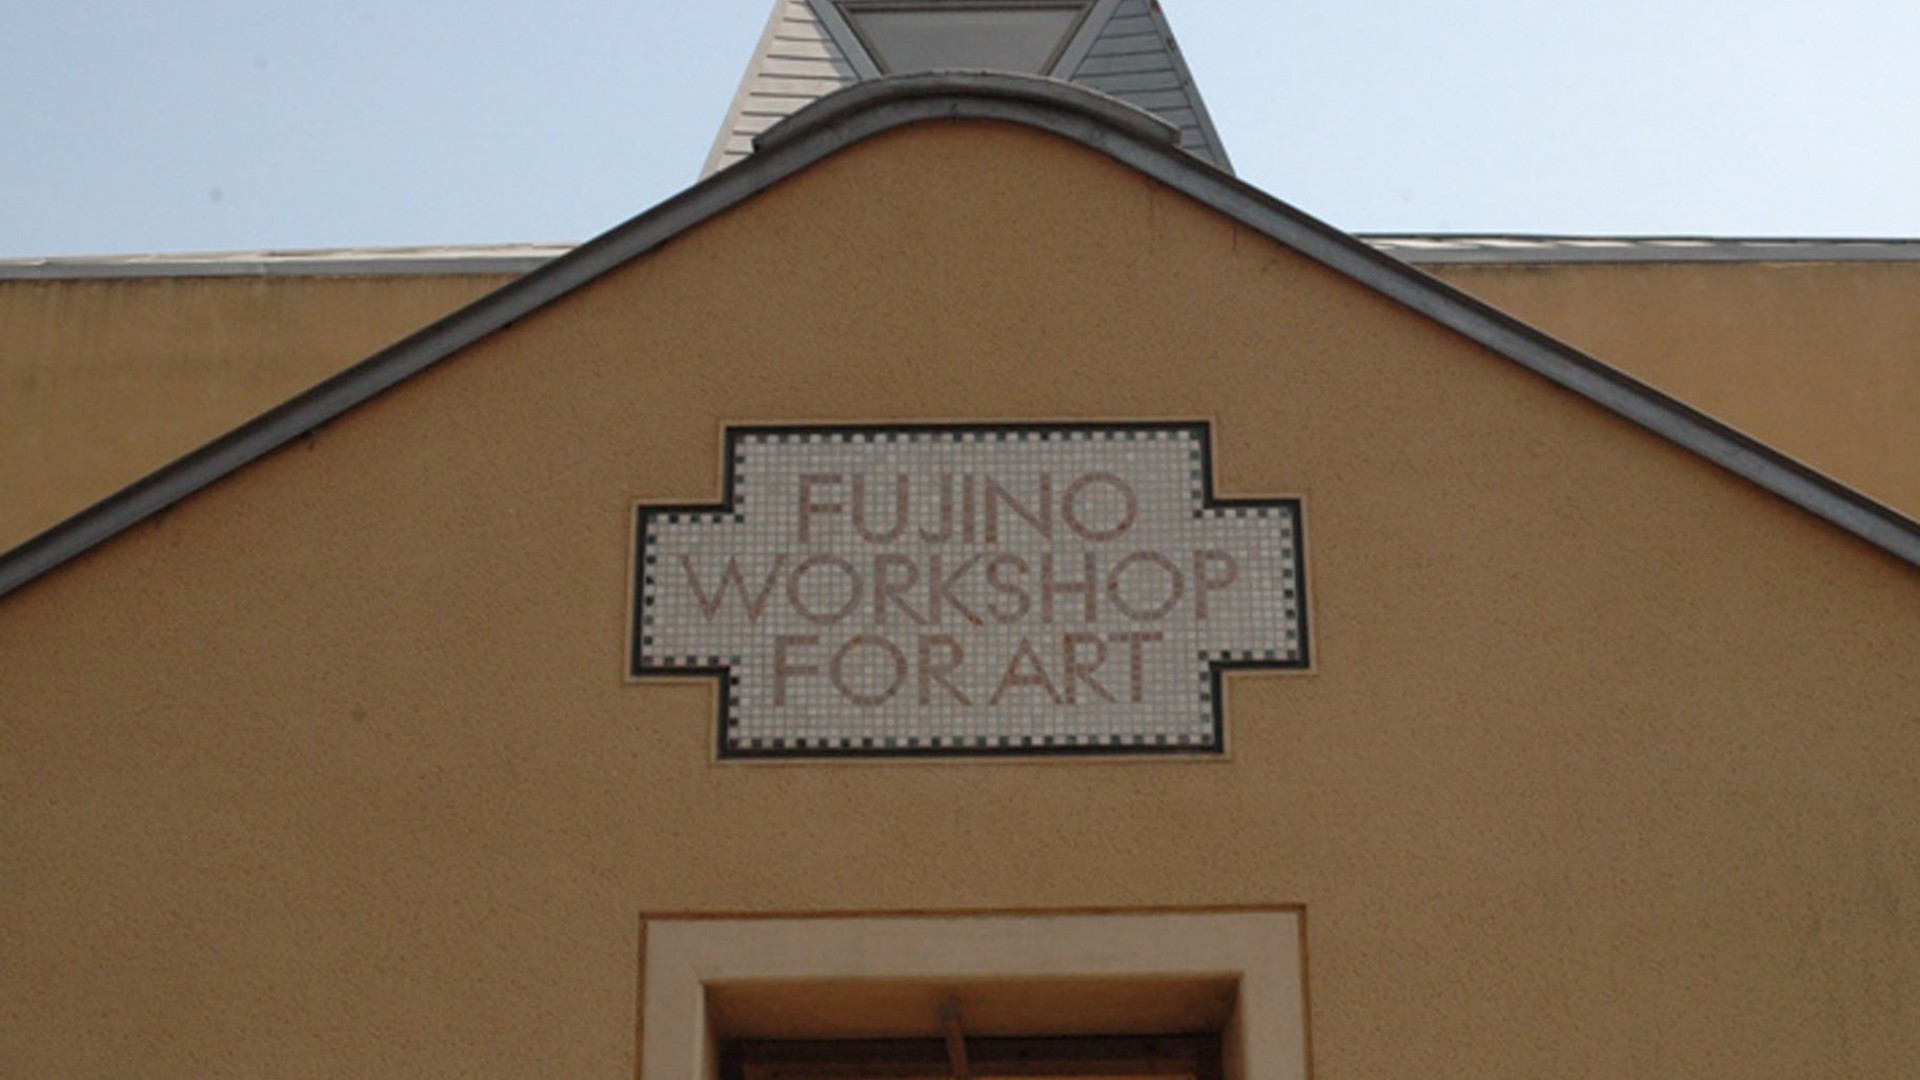 Fujino Workshop for Art